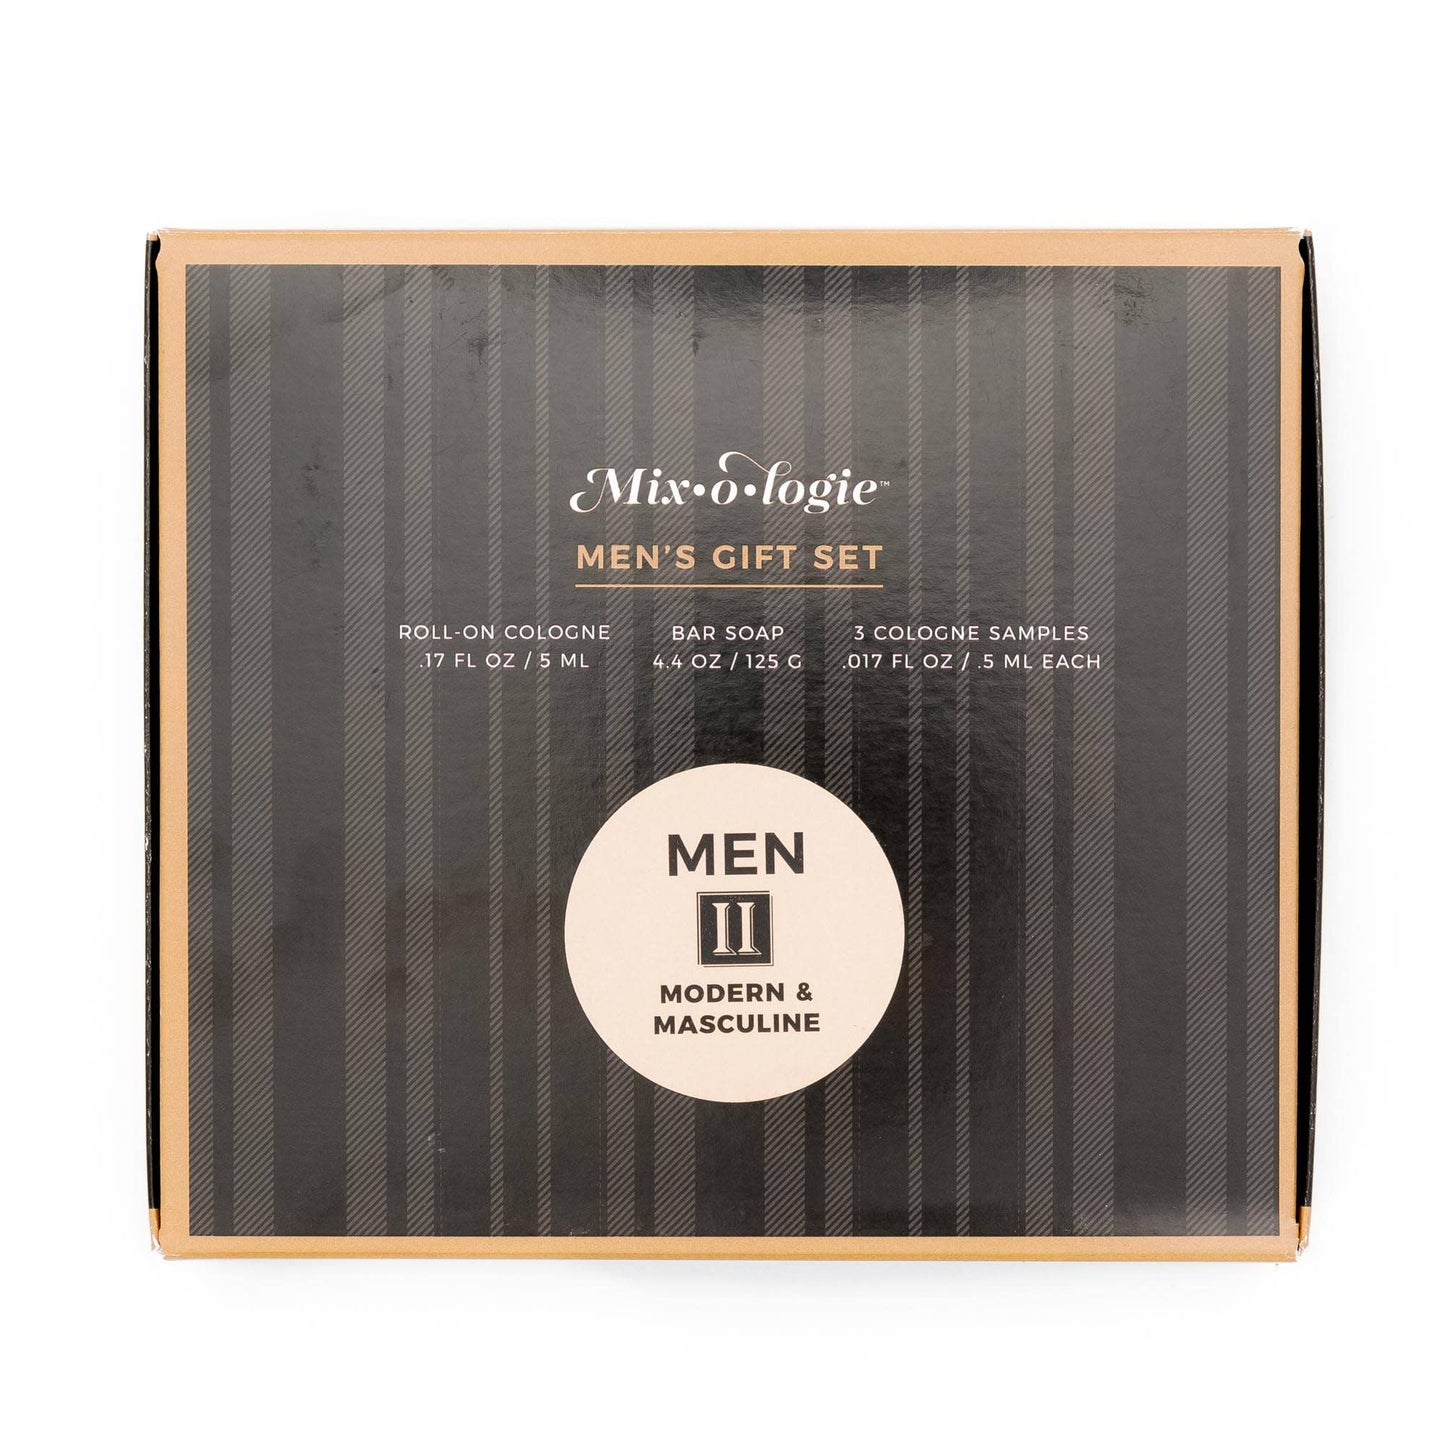 Men's Gift Box Duo: Men's II (modern and masculine) LP